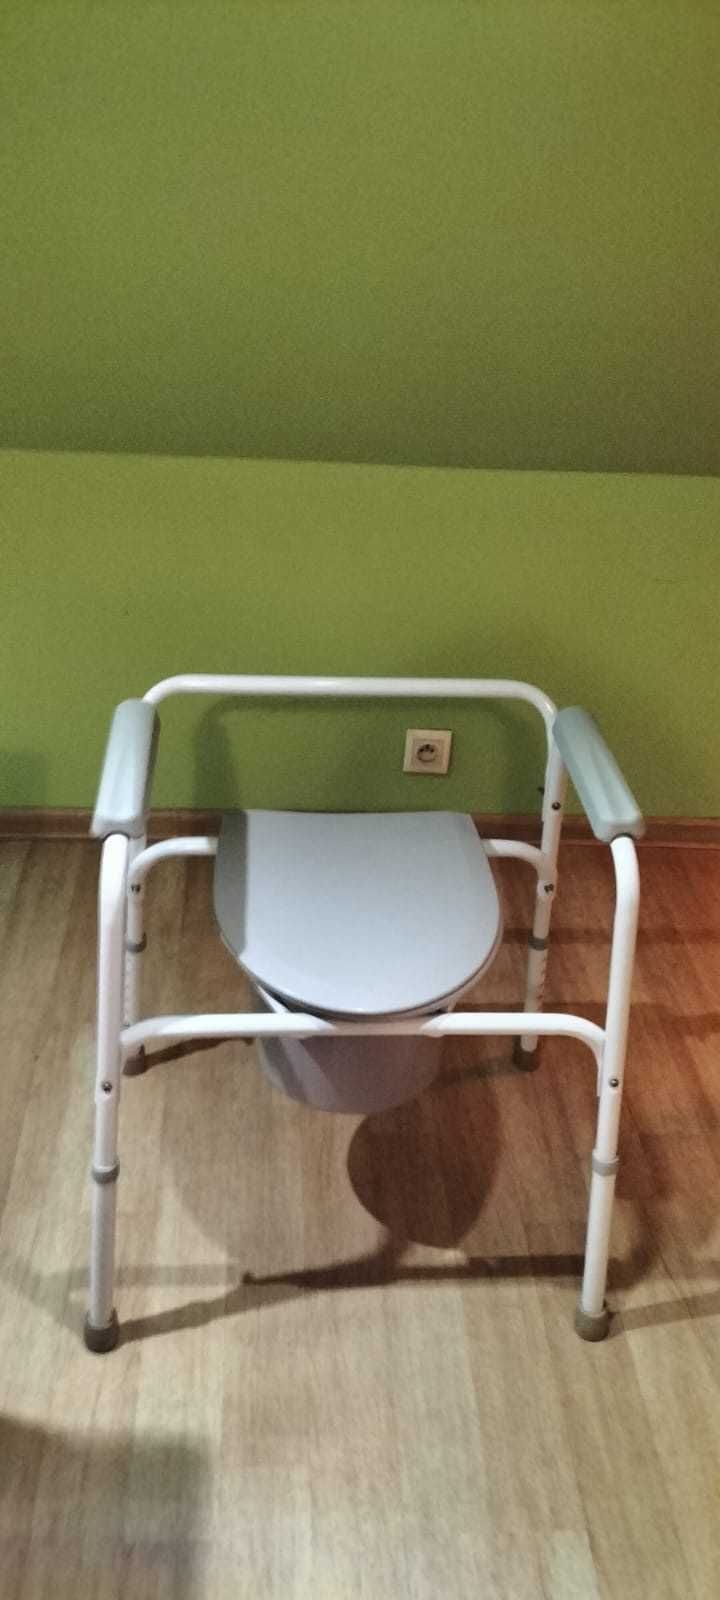 Krzesełko z toaletą